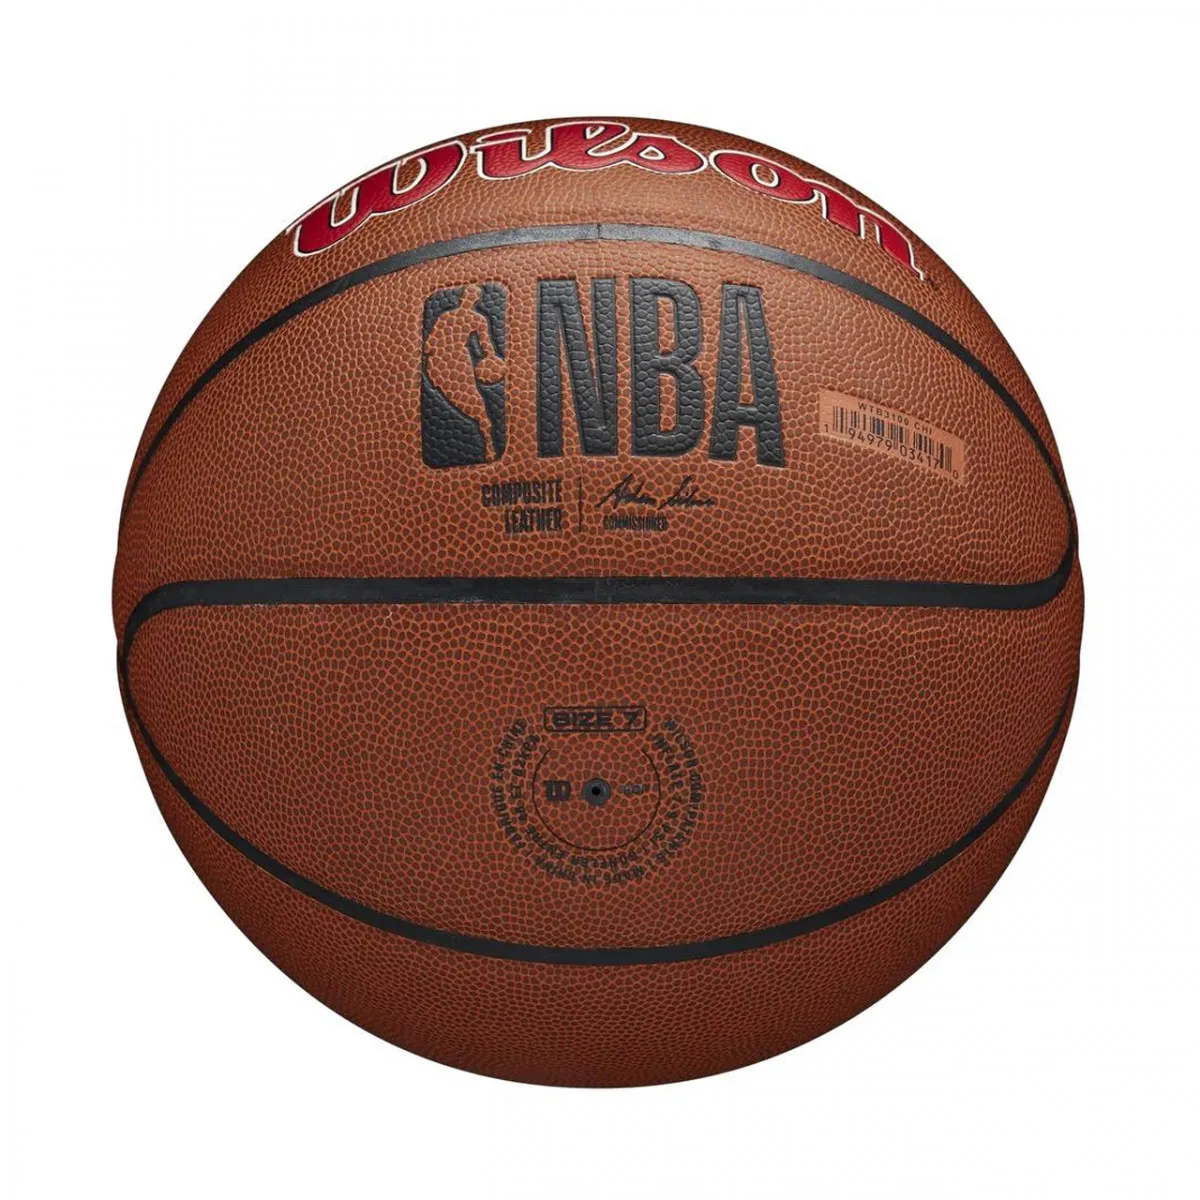 Баскетбольный мяч Wilson red bulls#2